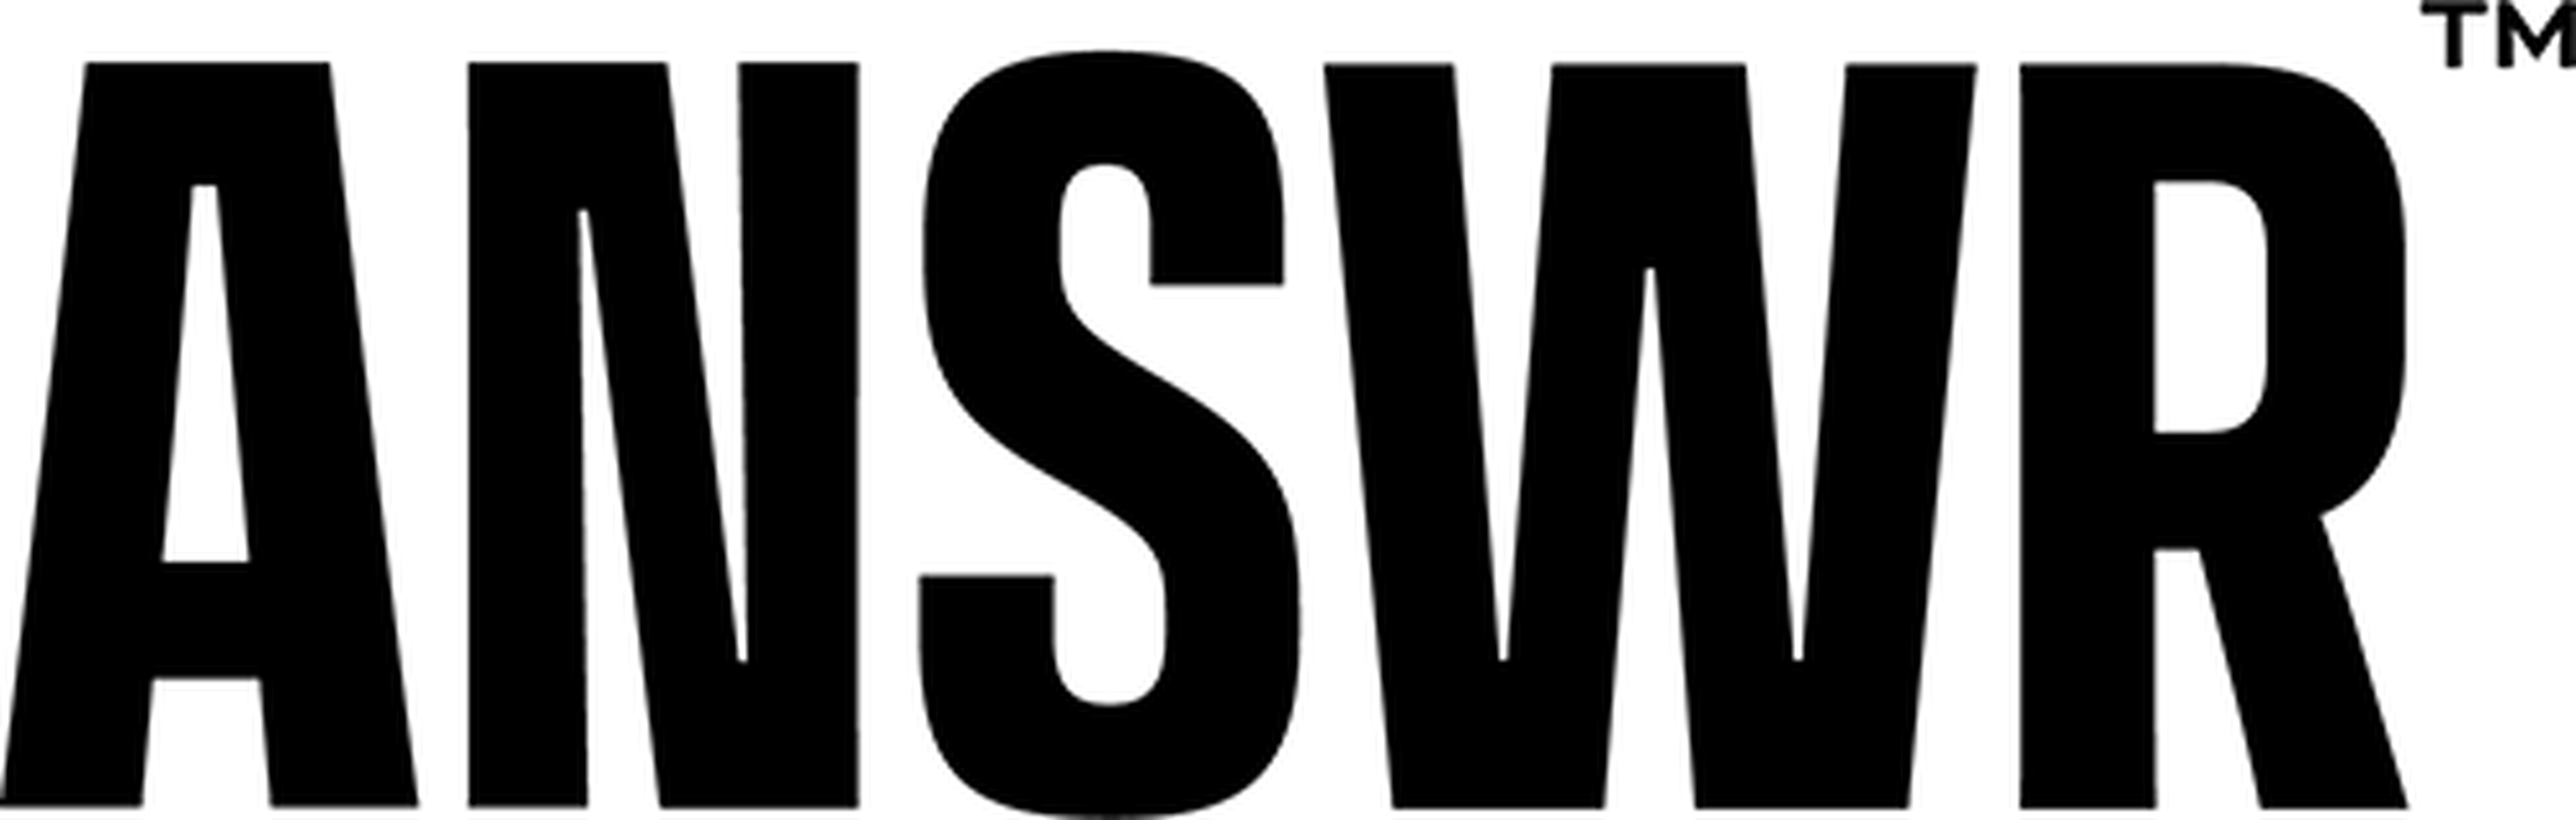 ANSWR logotype